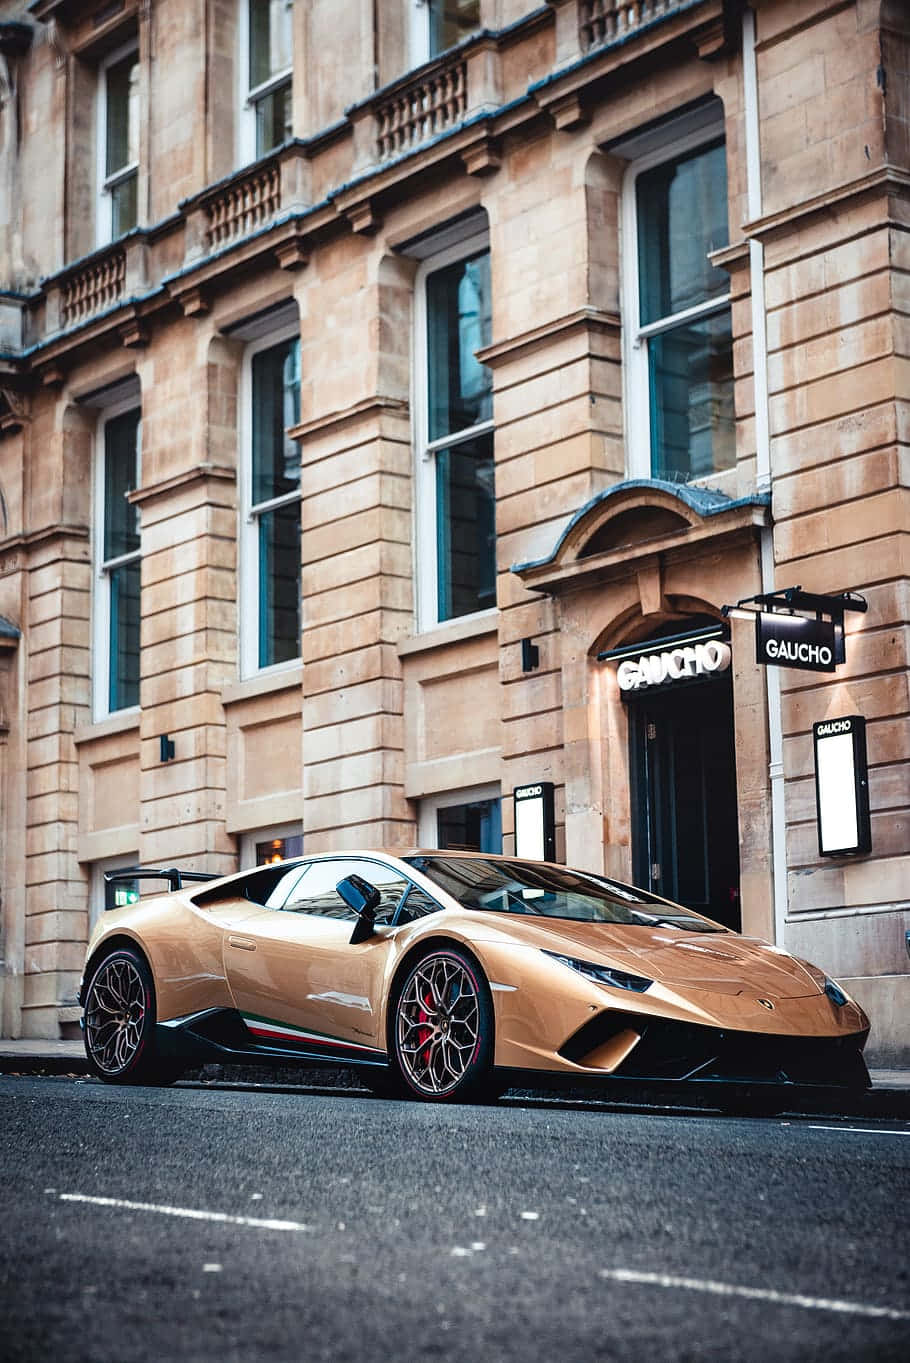 Gold Cars Lamborghini In City Background